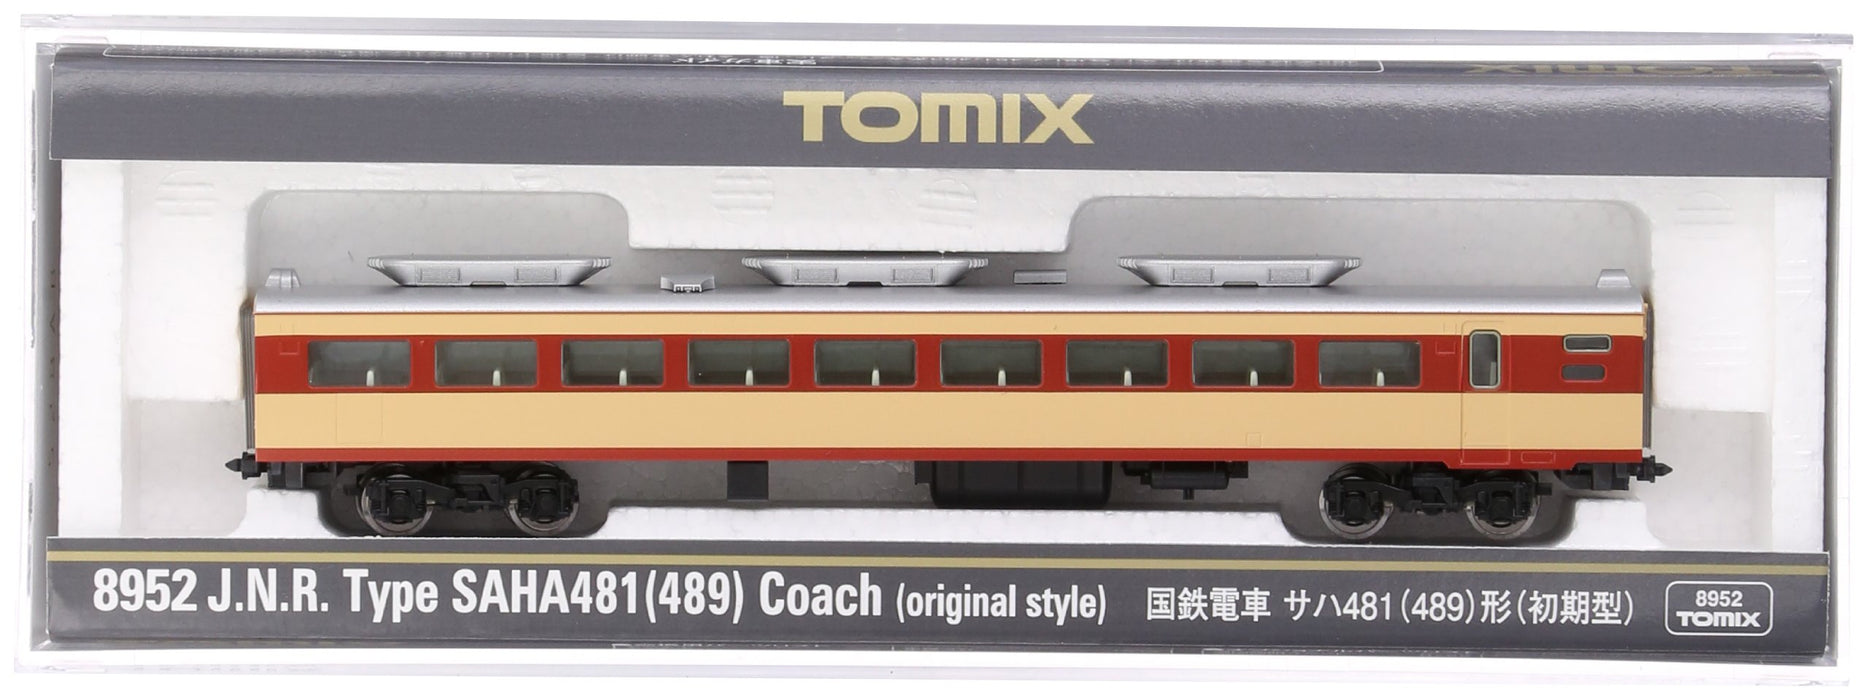 Tomytec Tomix Early Model 489 Railway N Gauge Train - 8952 Saha 481